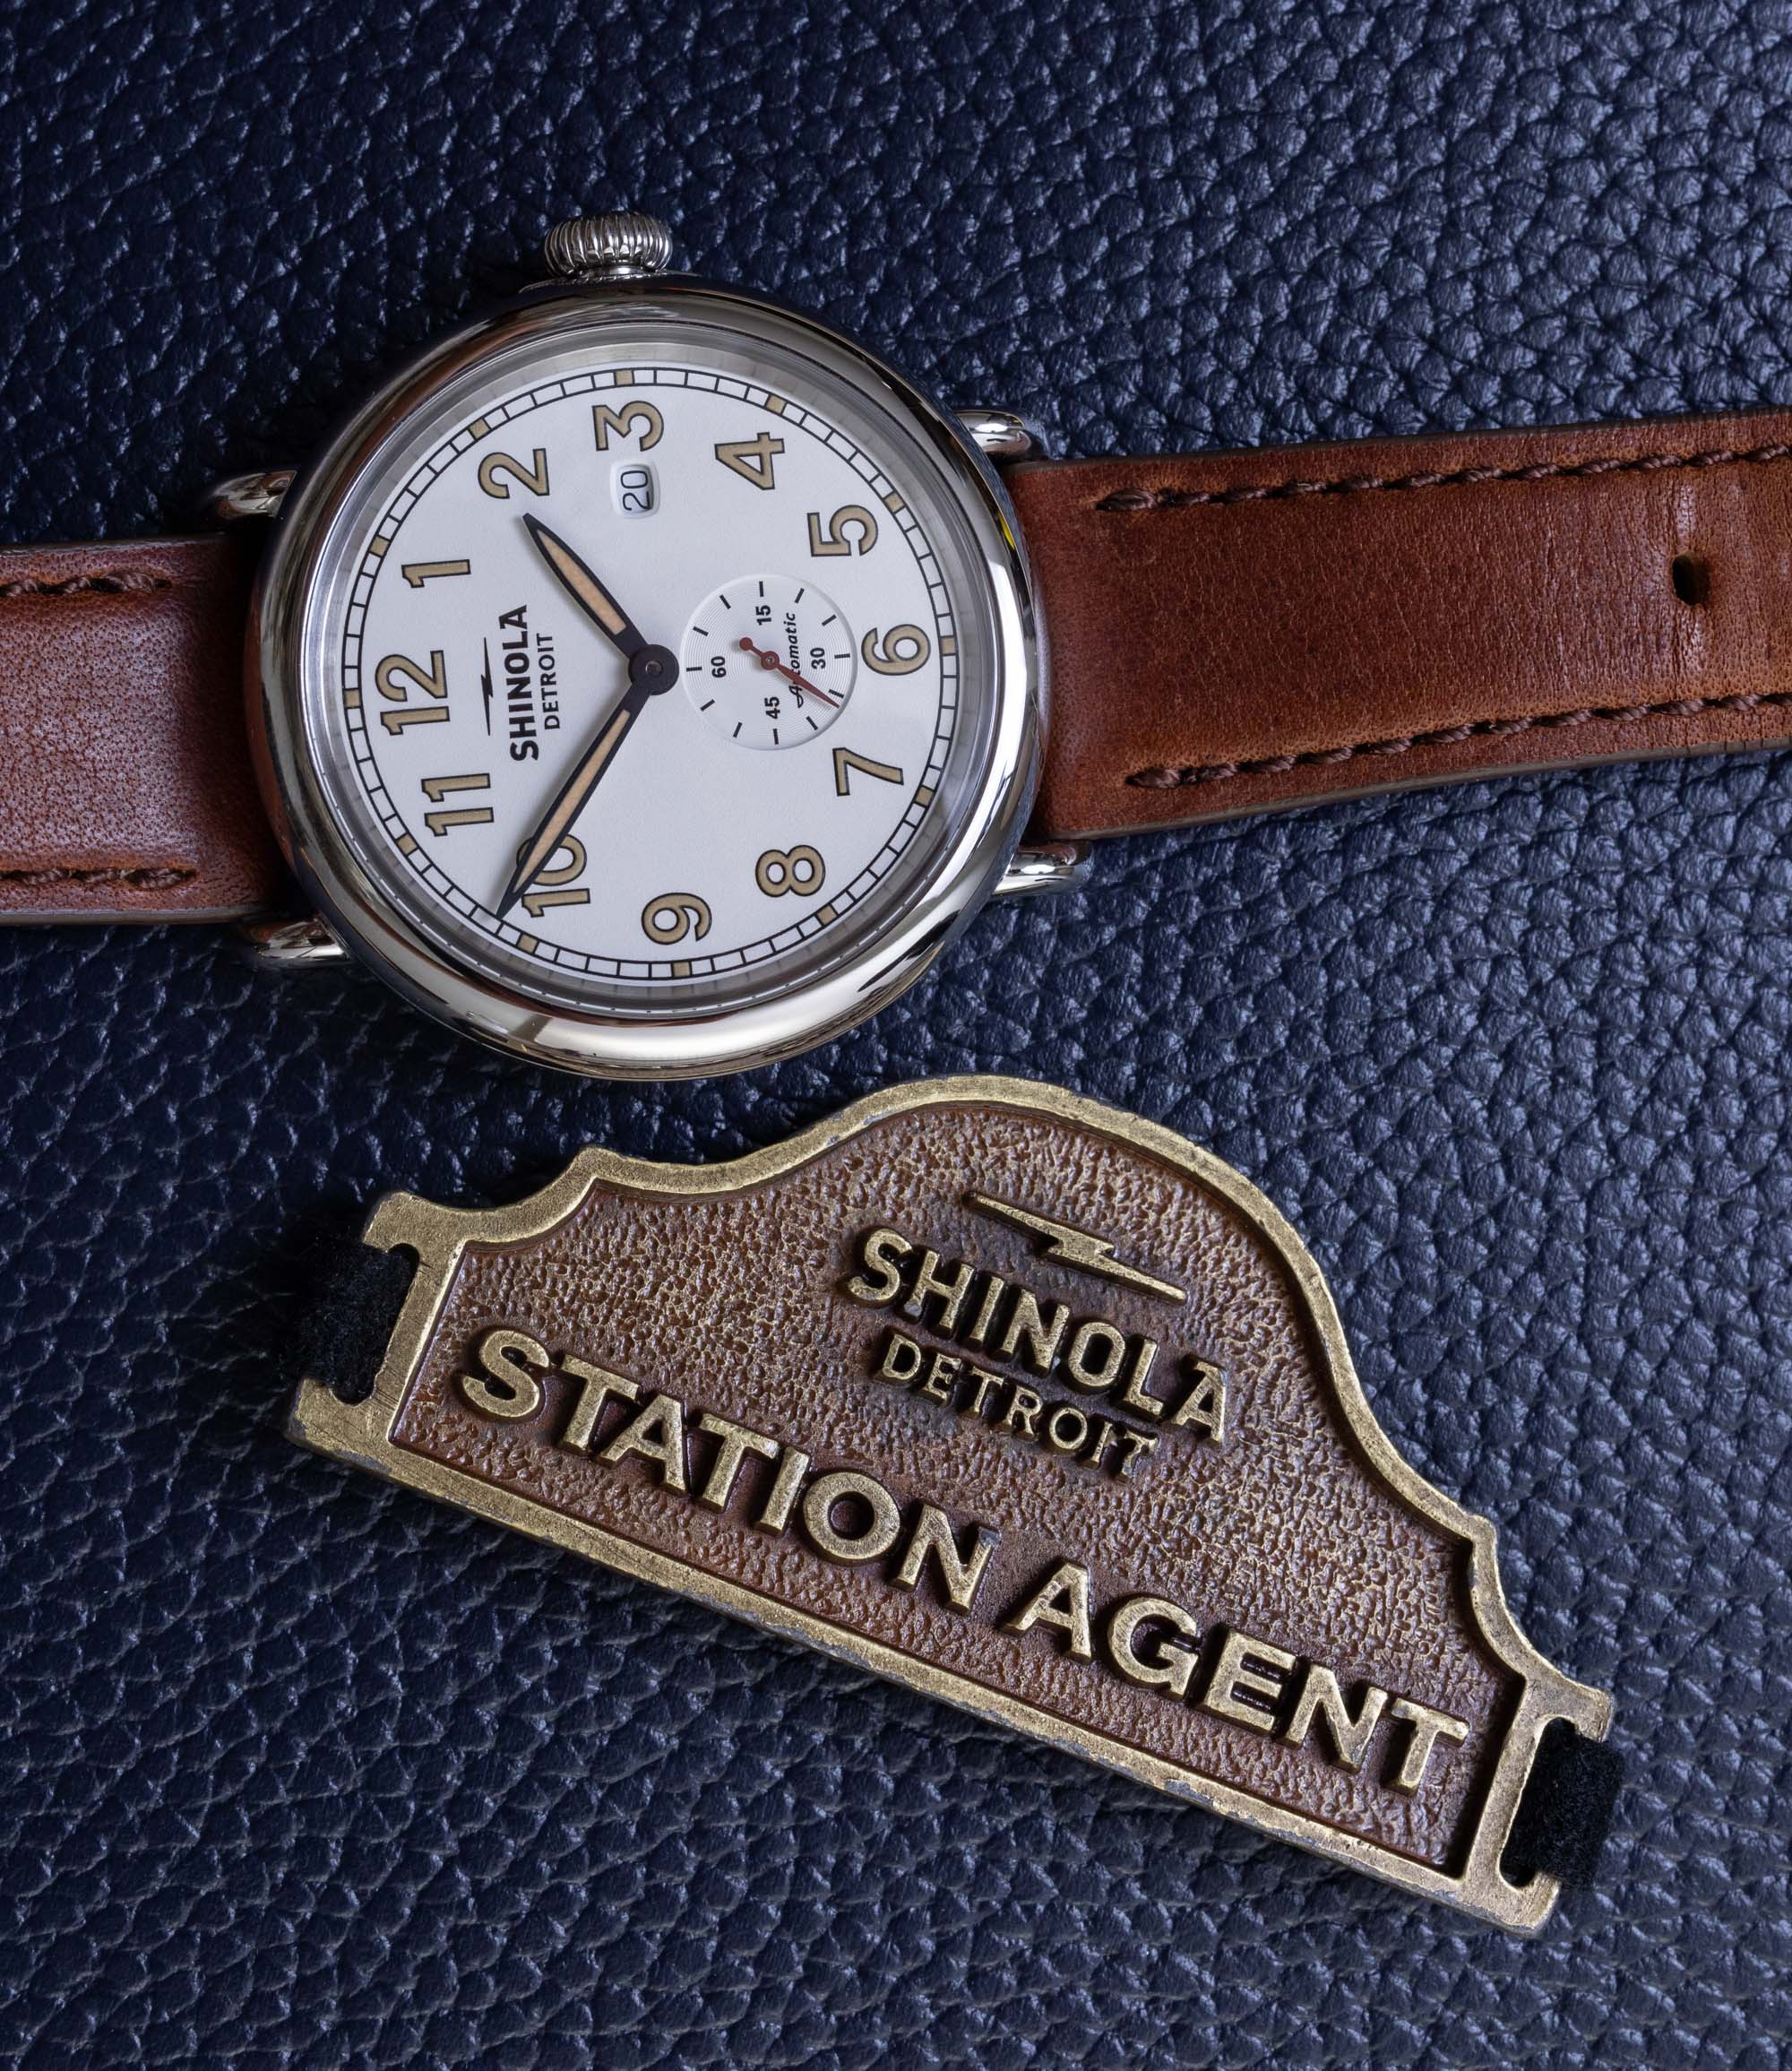 Обзор часов: Shinola Detroit Runwell Station Agent со швейцарским автоматическим механизмом